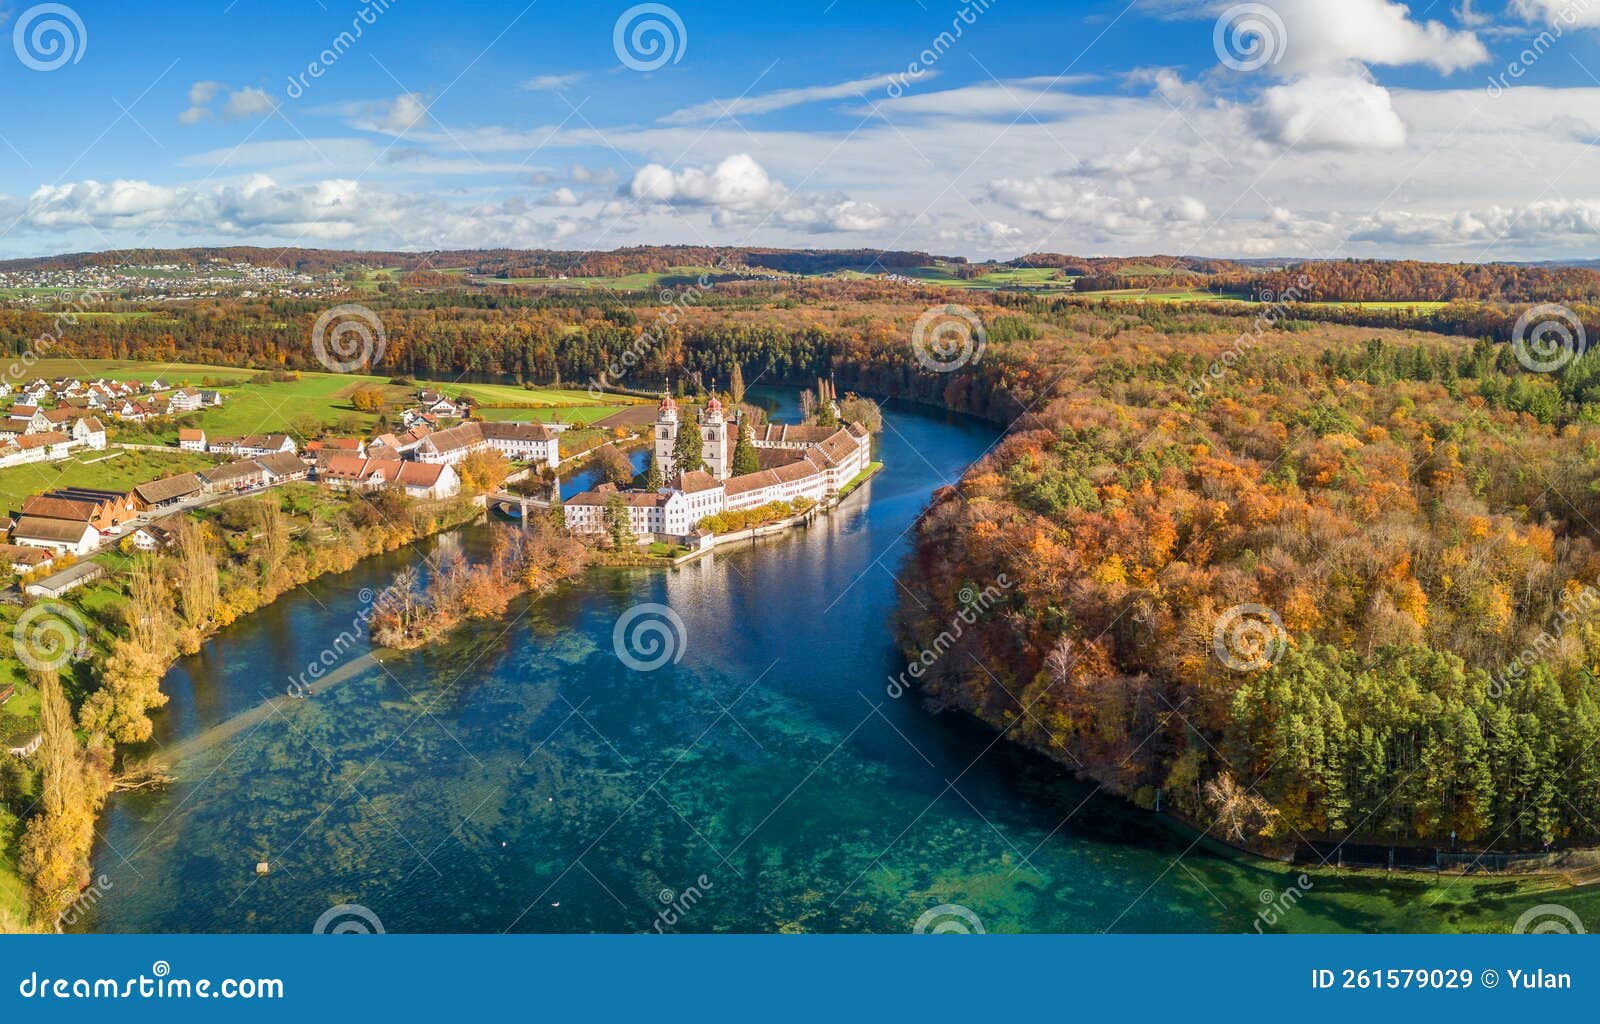 aerial panorama view of the rheinau abbey islet on rhine river